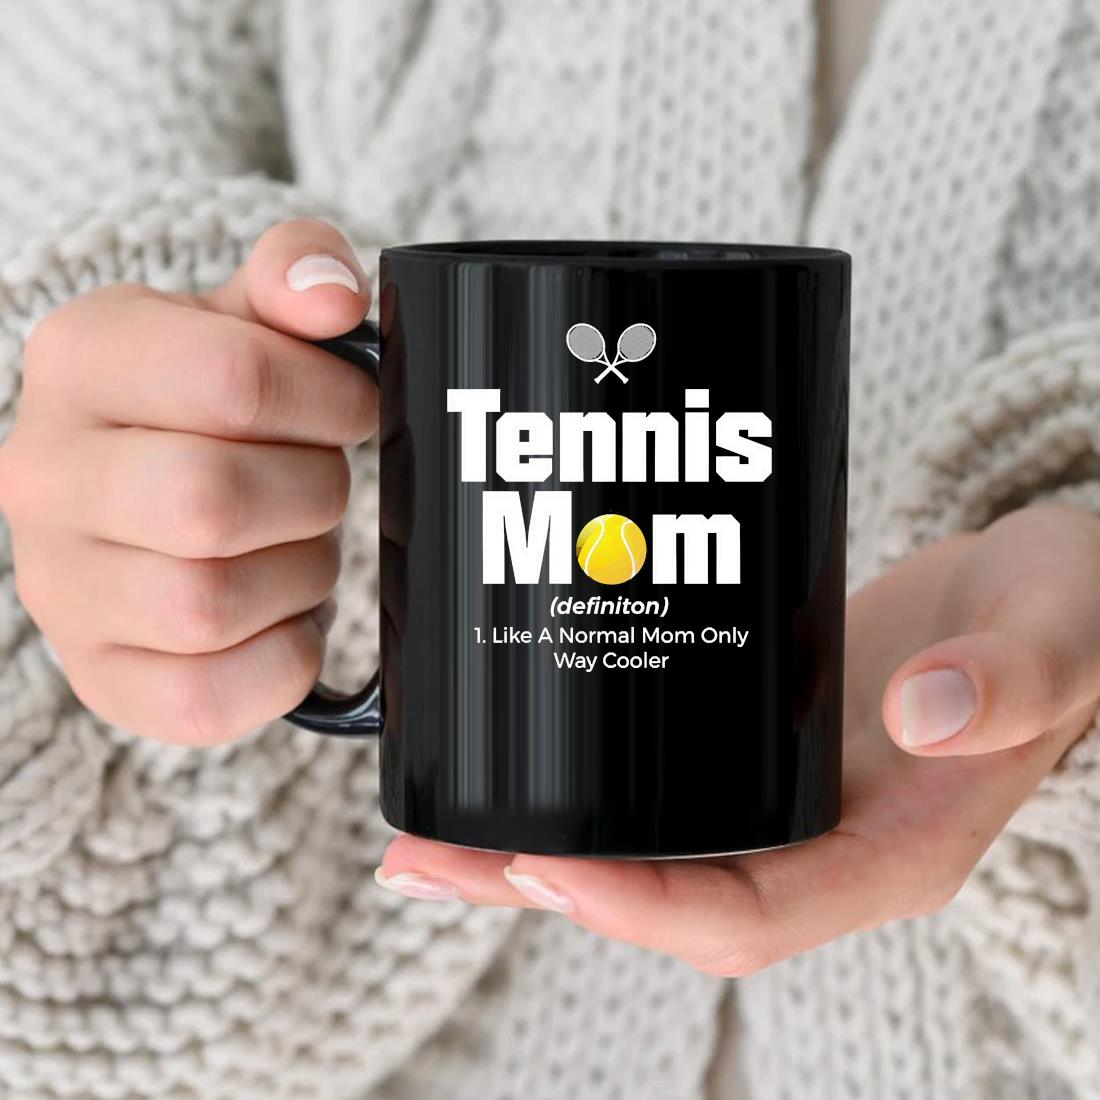 Tennis Mom Definition 1. Like A Normal Mom Only Way Cooler Mug nhu